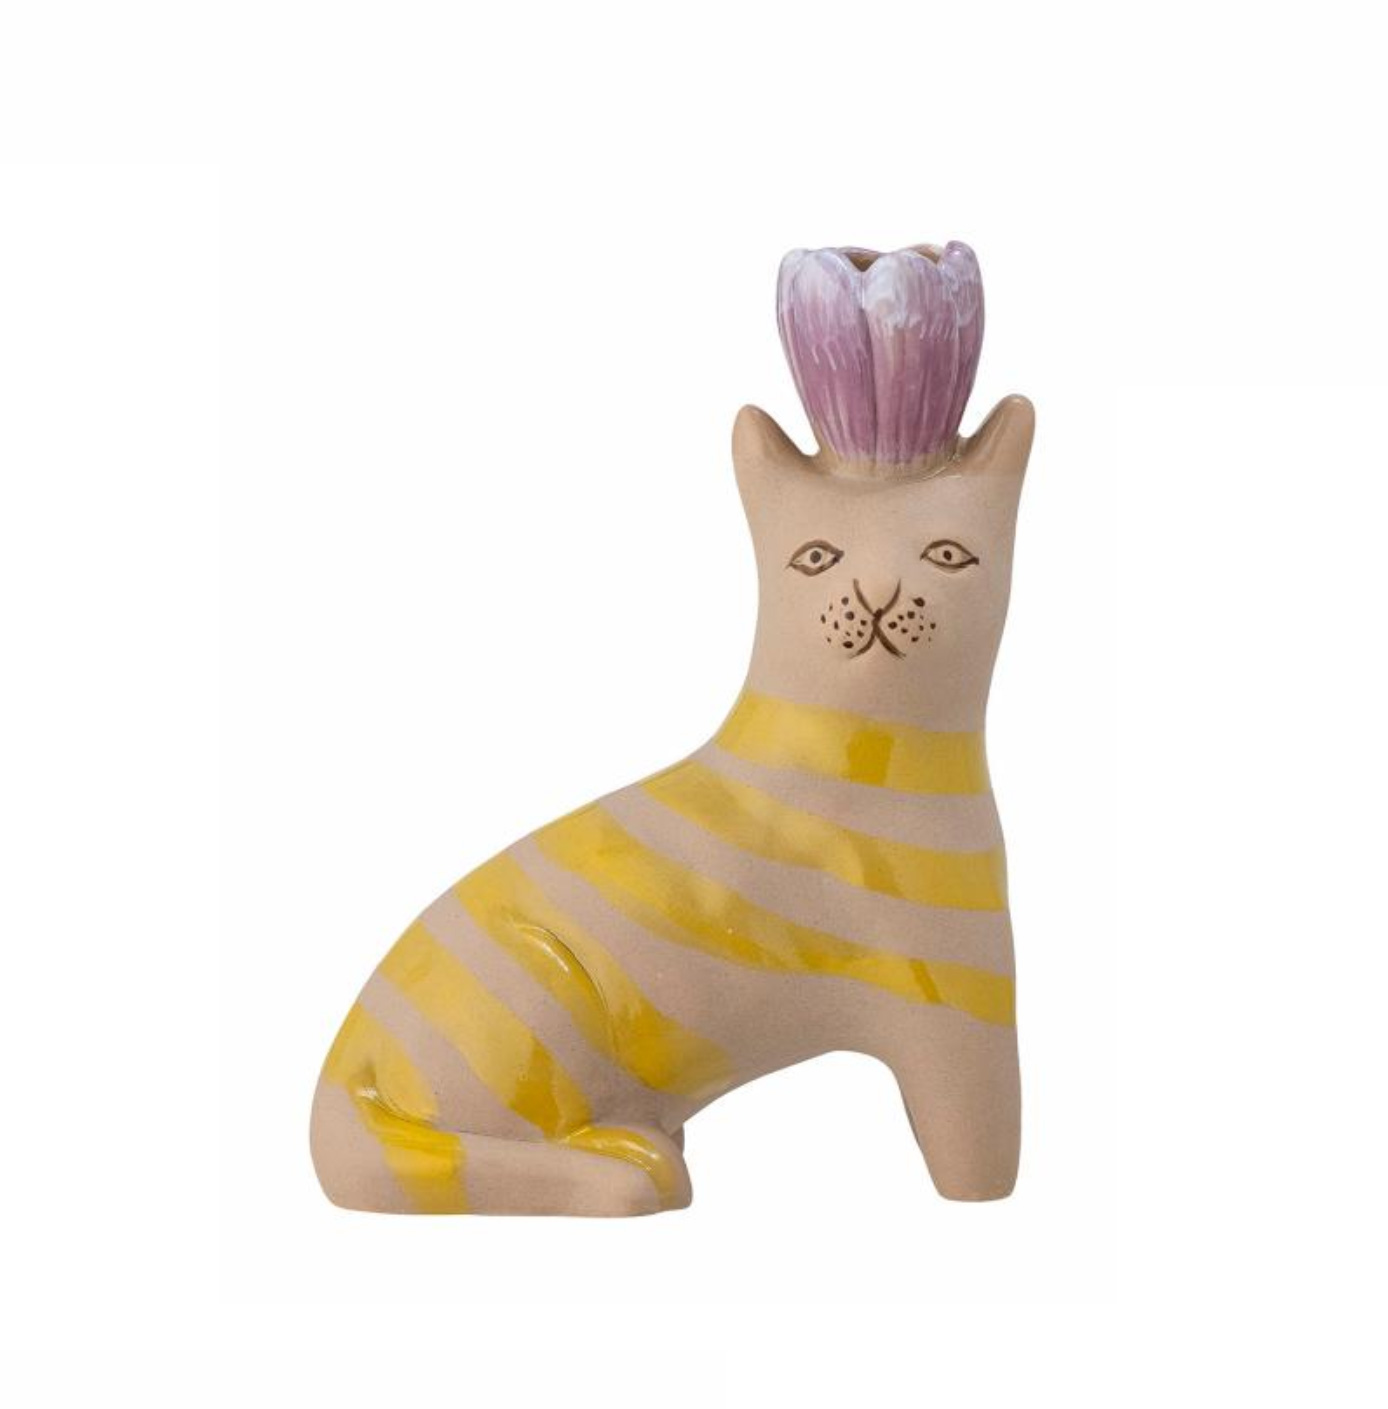  Kerzenhalter Katze sitzend, Keramik, Kerzenständer Mamie von Bloomingville, pro Stück 